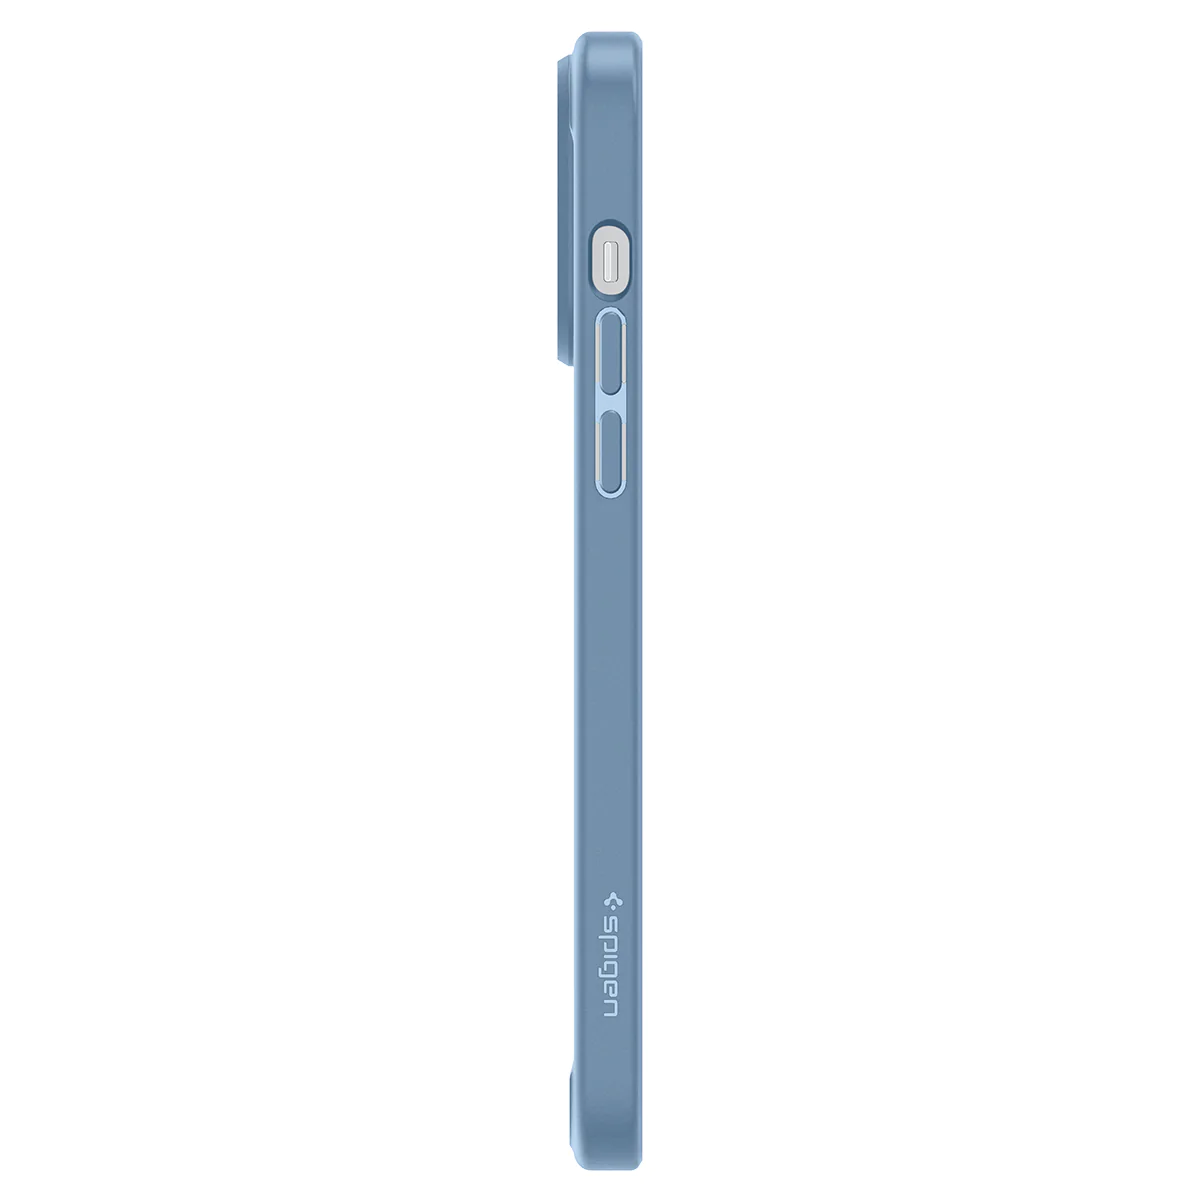 Spigen iPhone 14 Pro Max Ultra Hybrid Series-Sierra Blue